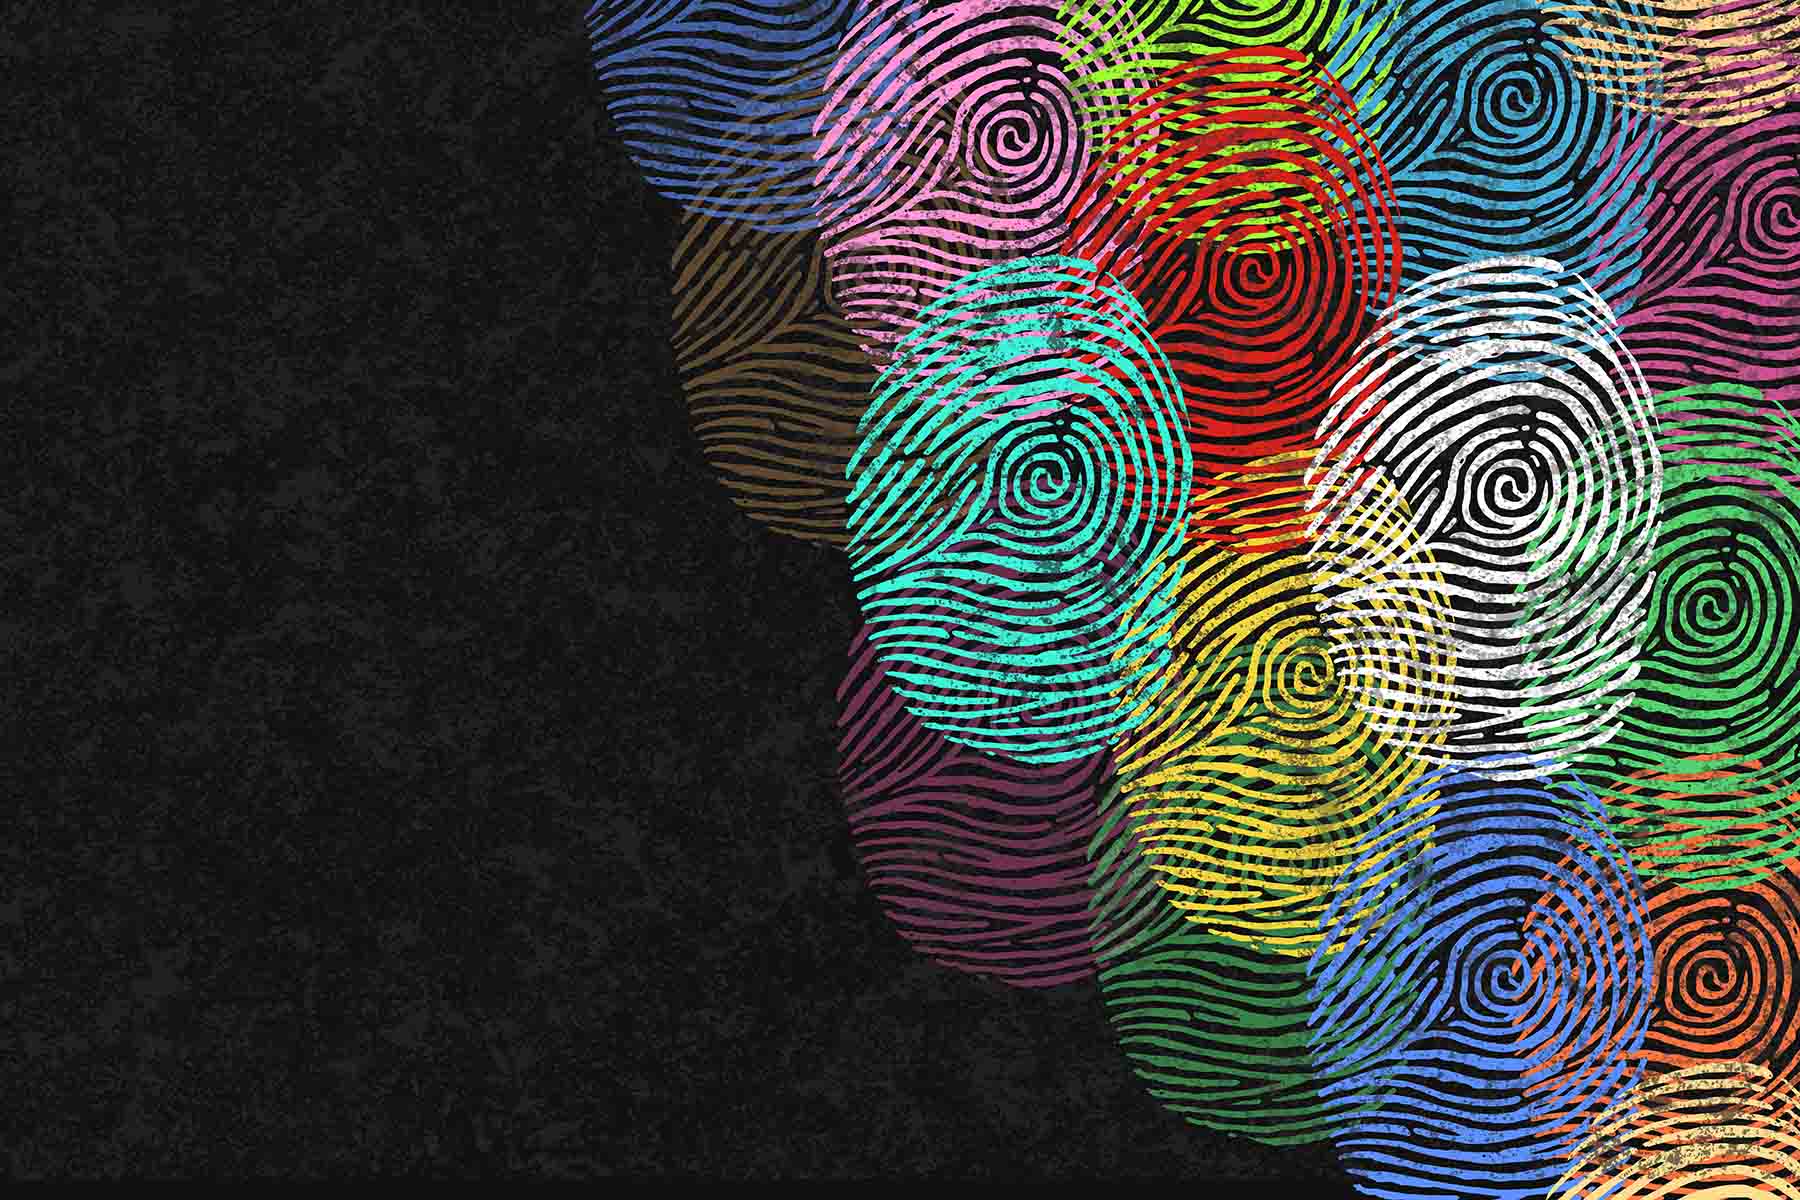 An illustration of overlapping fingerprints in different colours against a mottled black background.